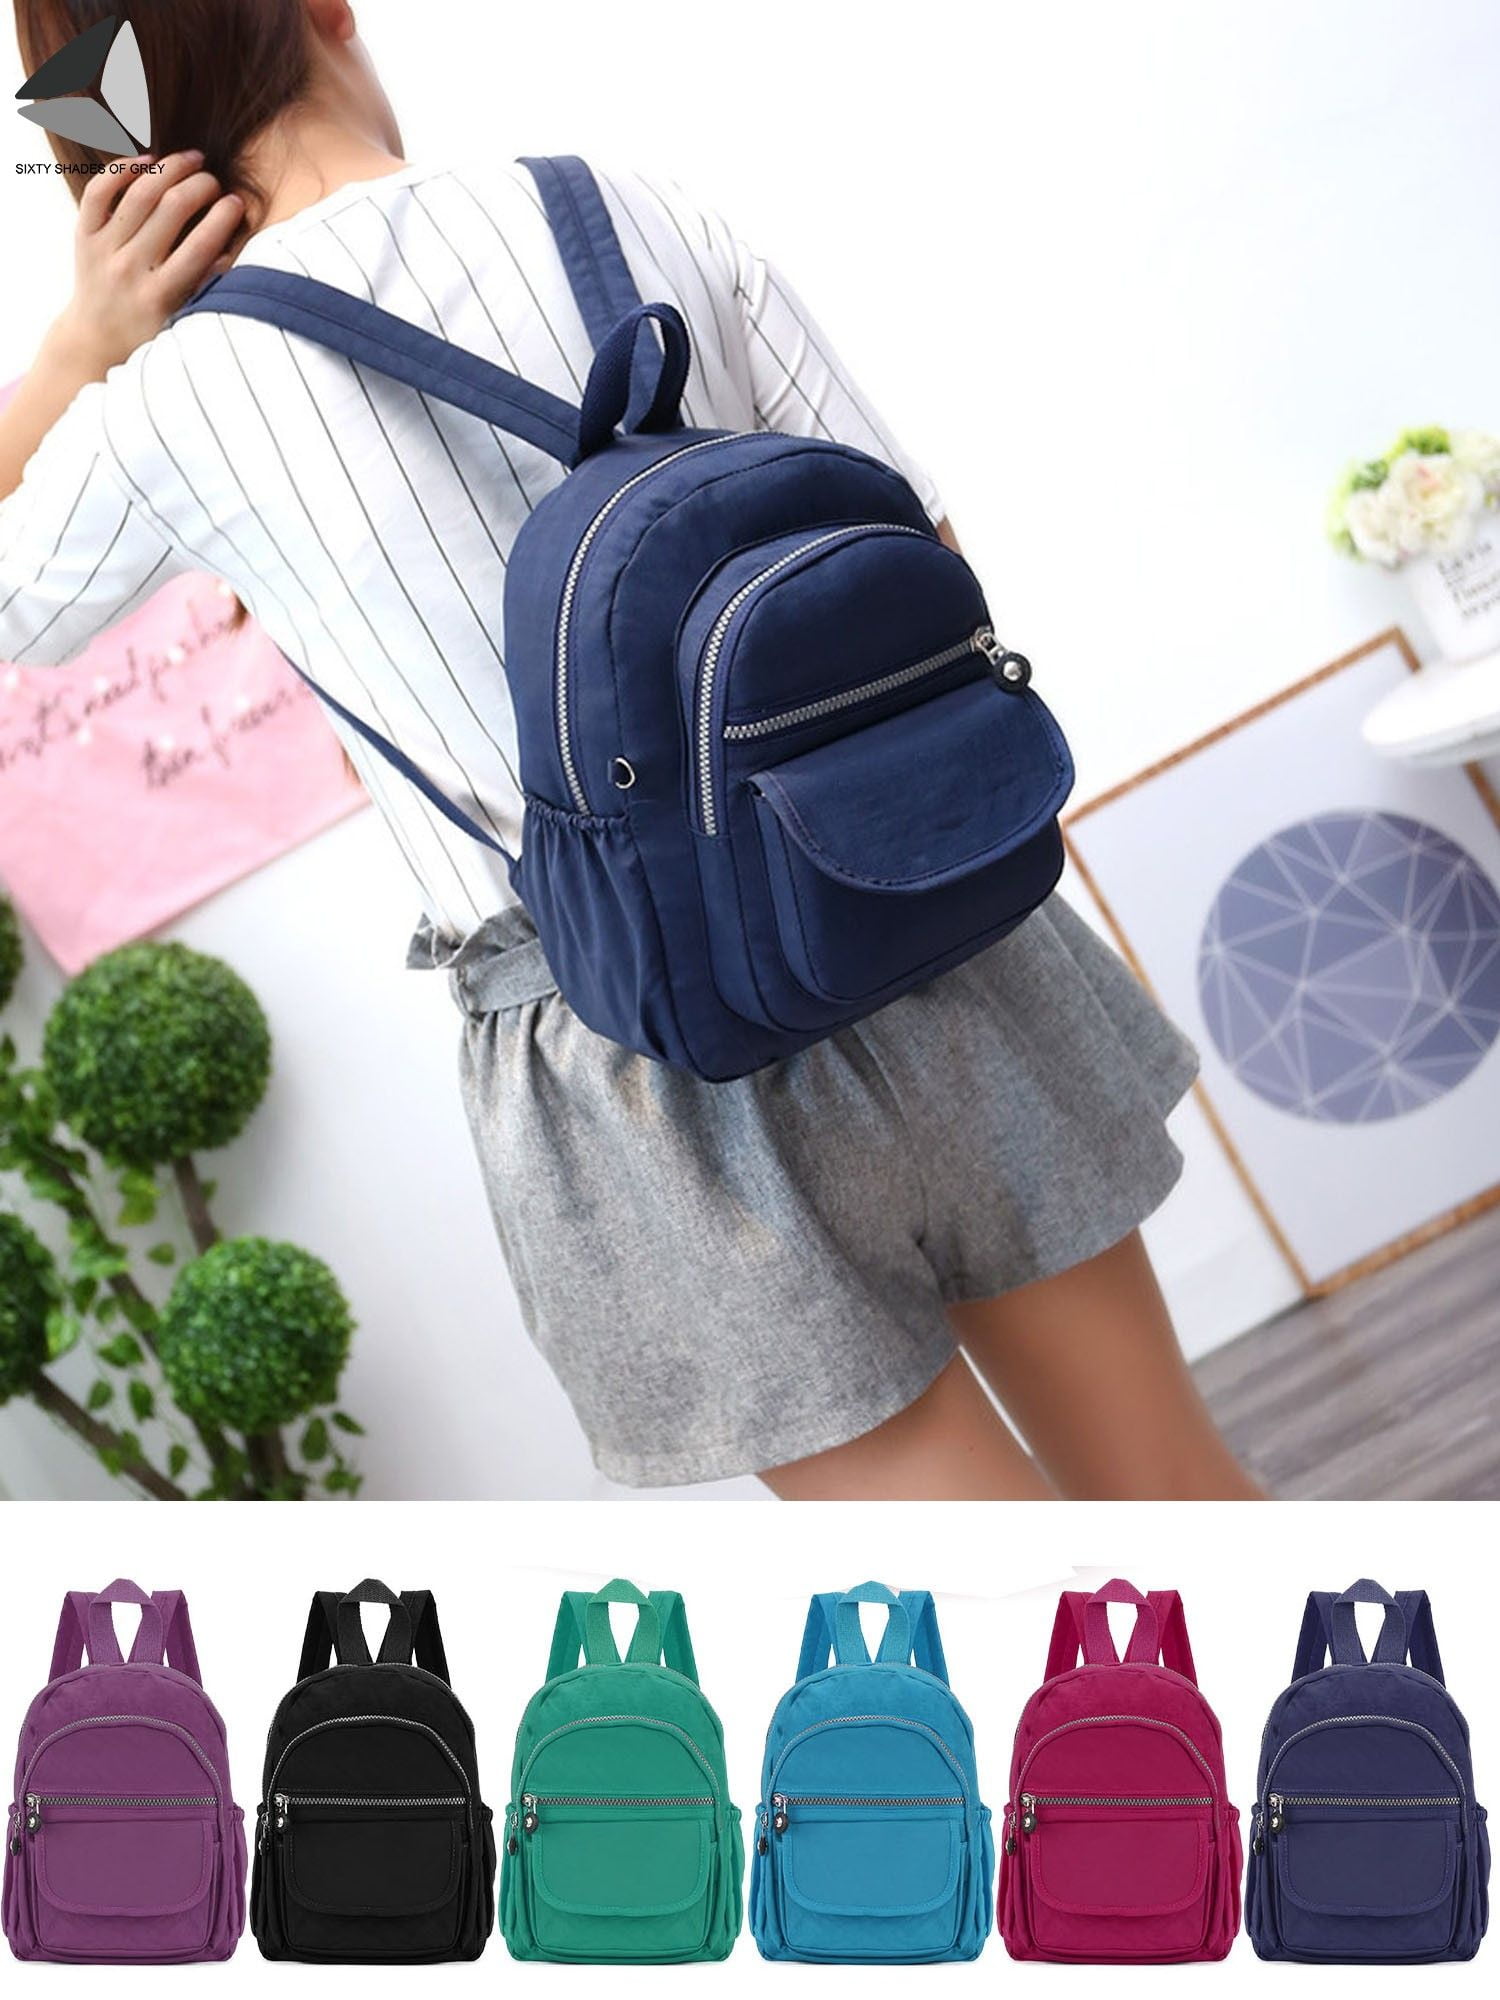 Fashion Women Girl Small Backpack Travel Black Nylon Handbag Shoulder Bag Gift 